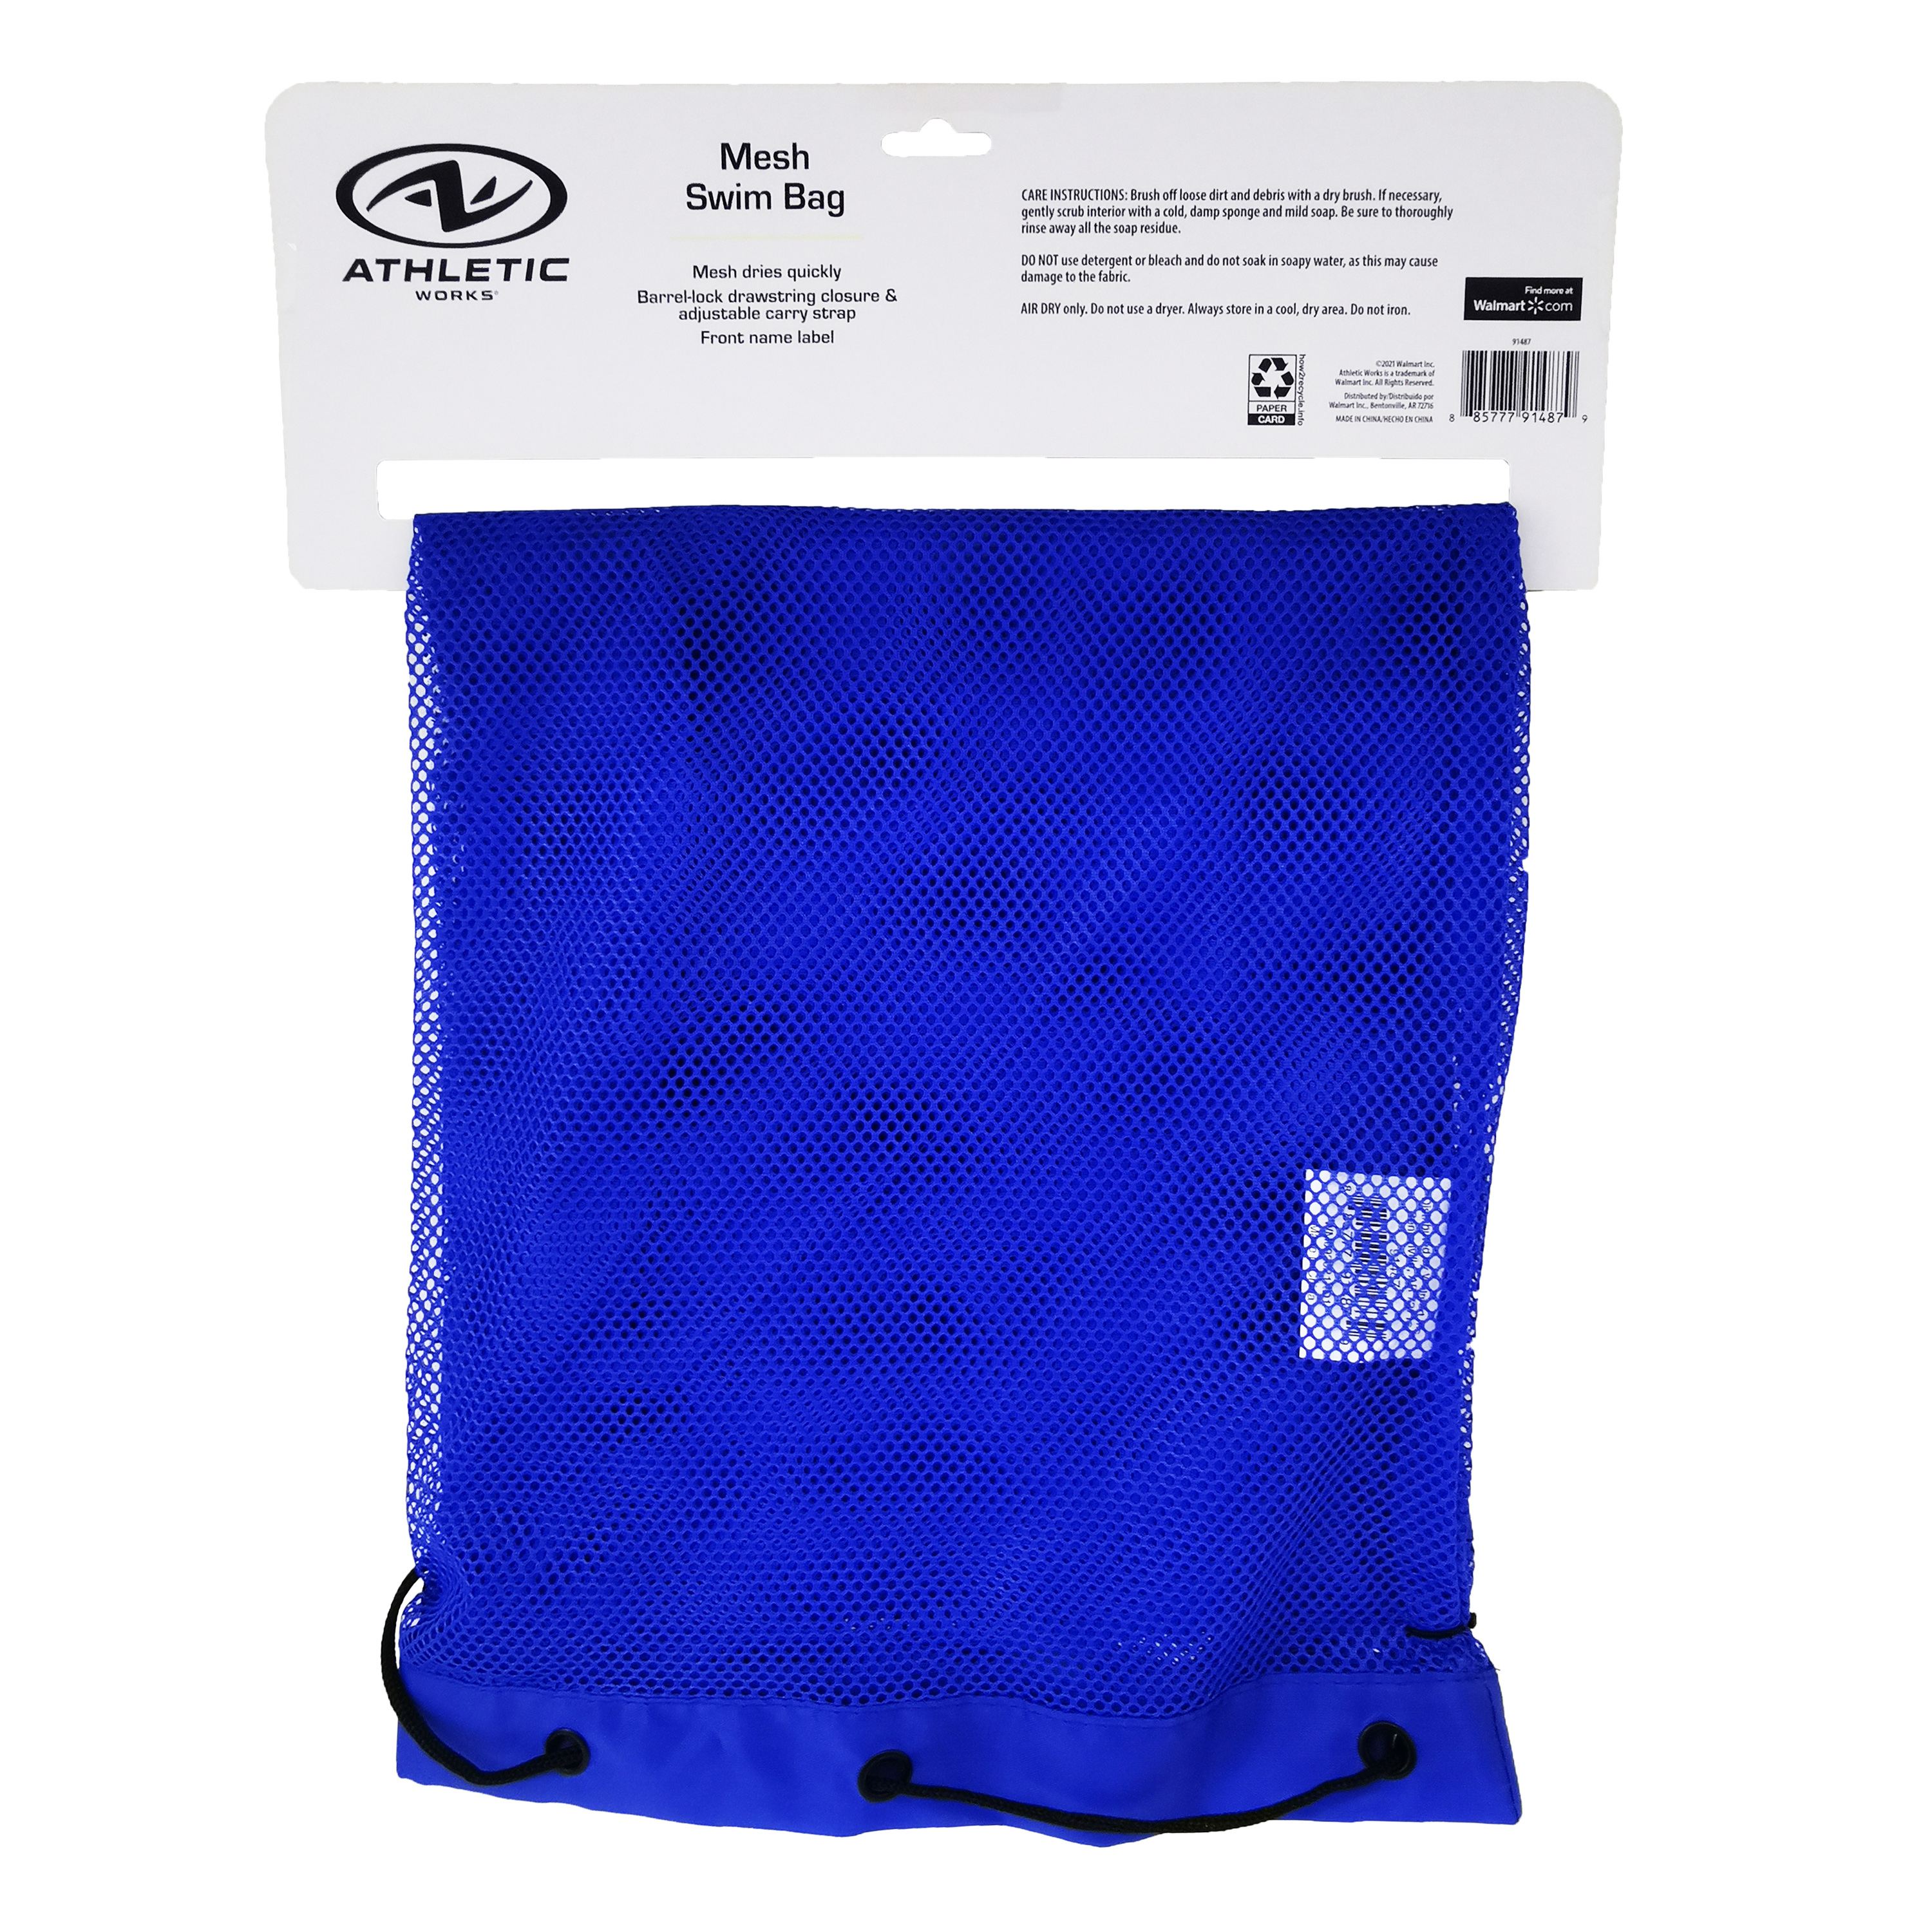 Athletic Works Mesh Swim Gear Bag with Drawstring, Large 75L, 28